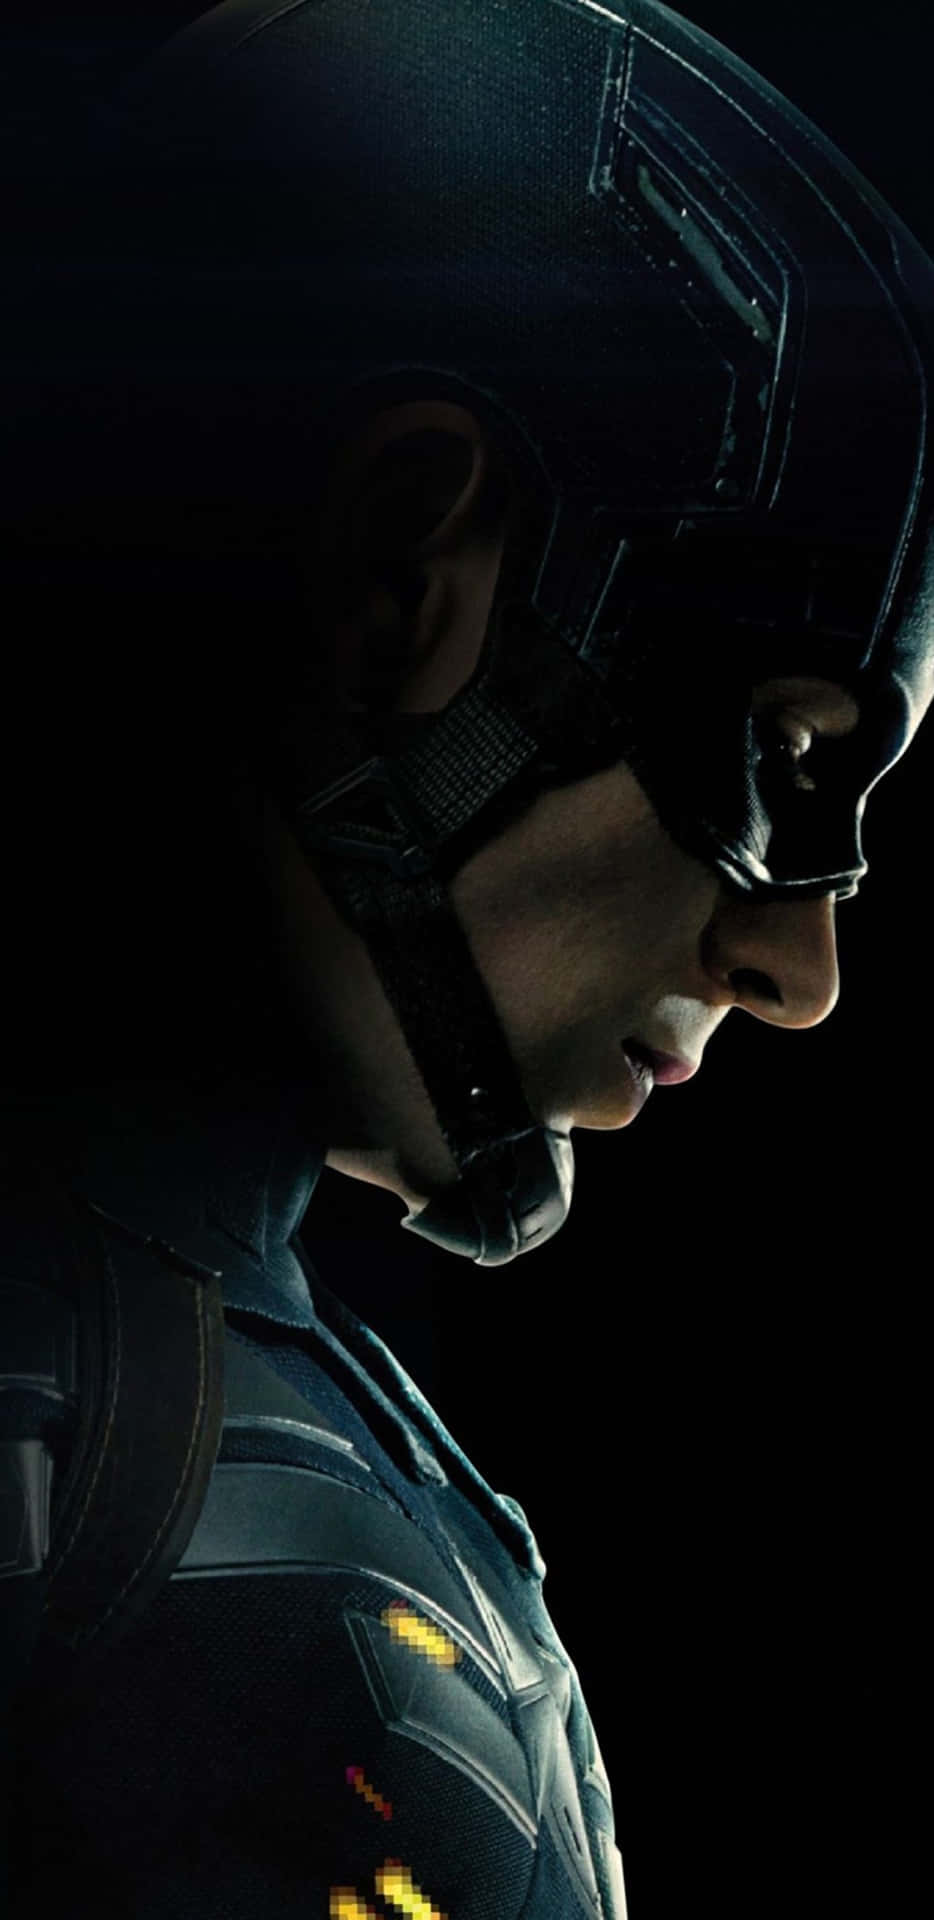 Pixel3xl Bakgrundsbild Med Captain America Och Chris Evans.